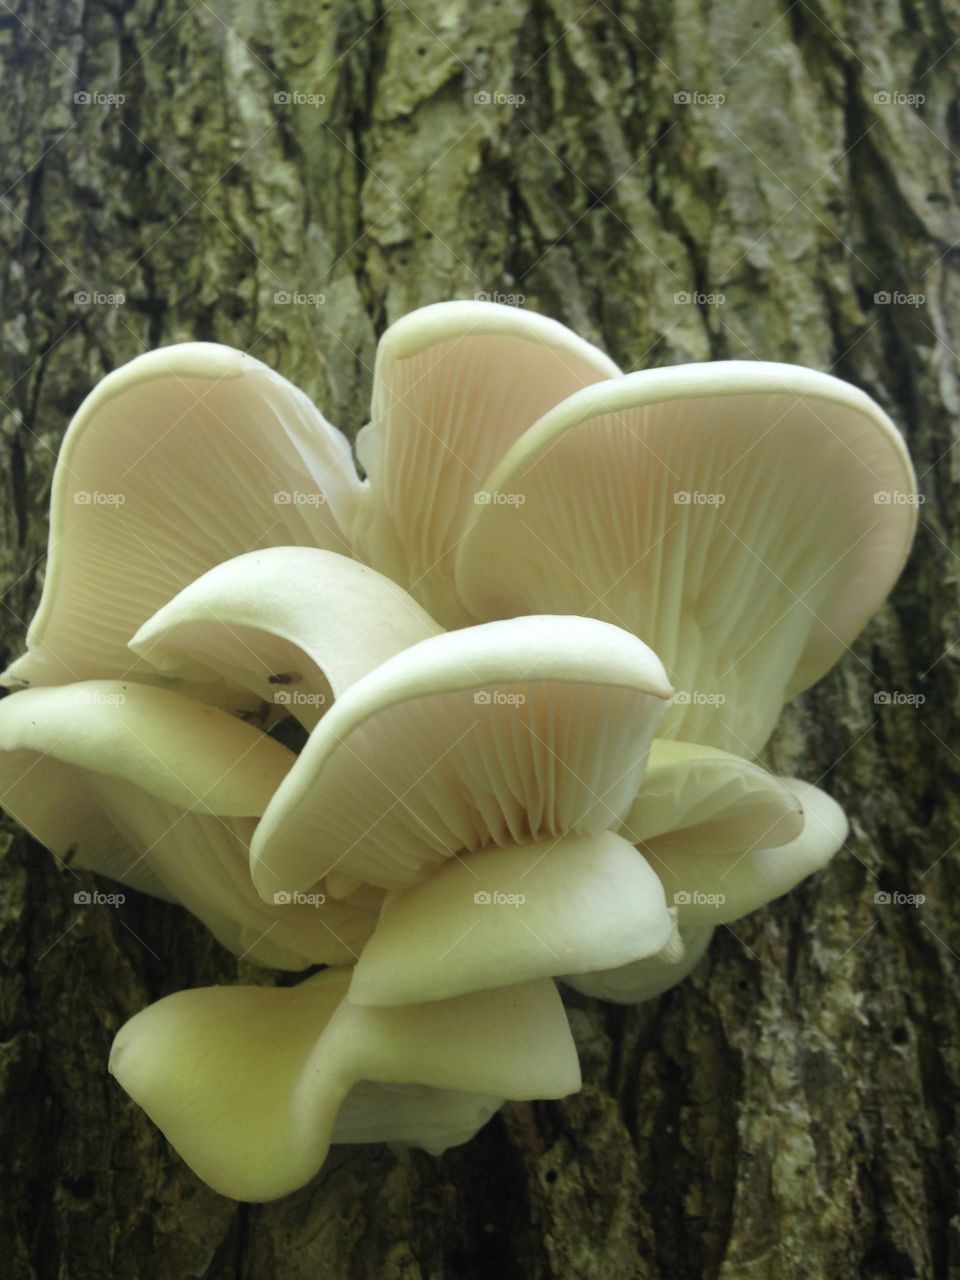 Fungus beauty 